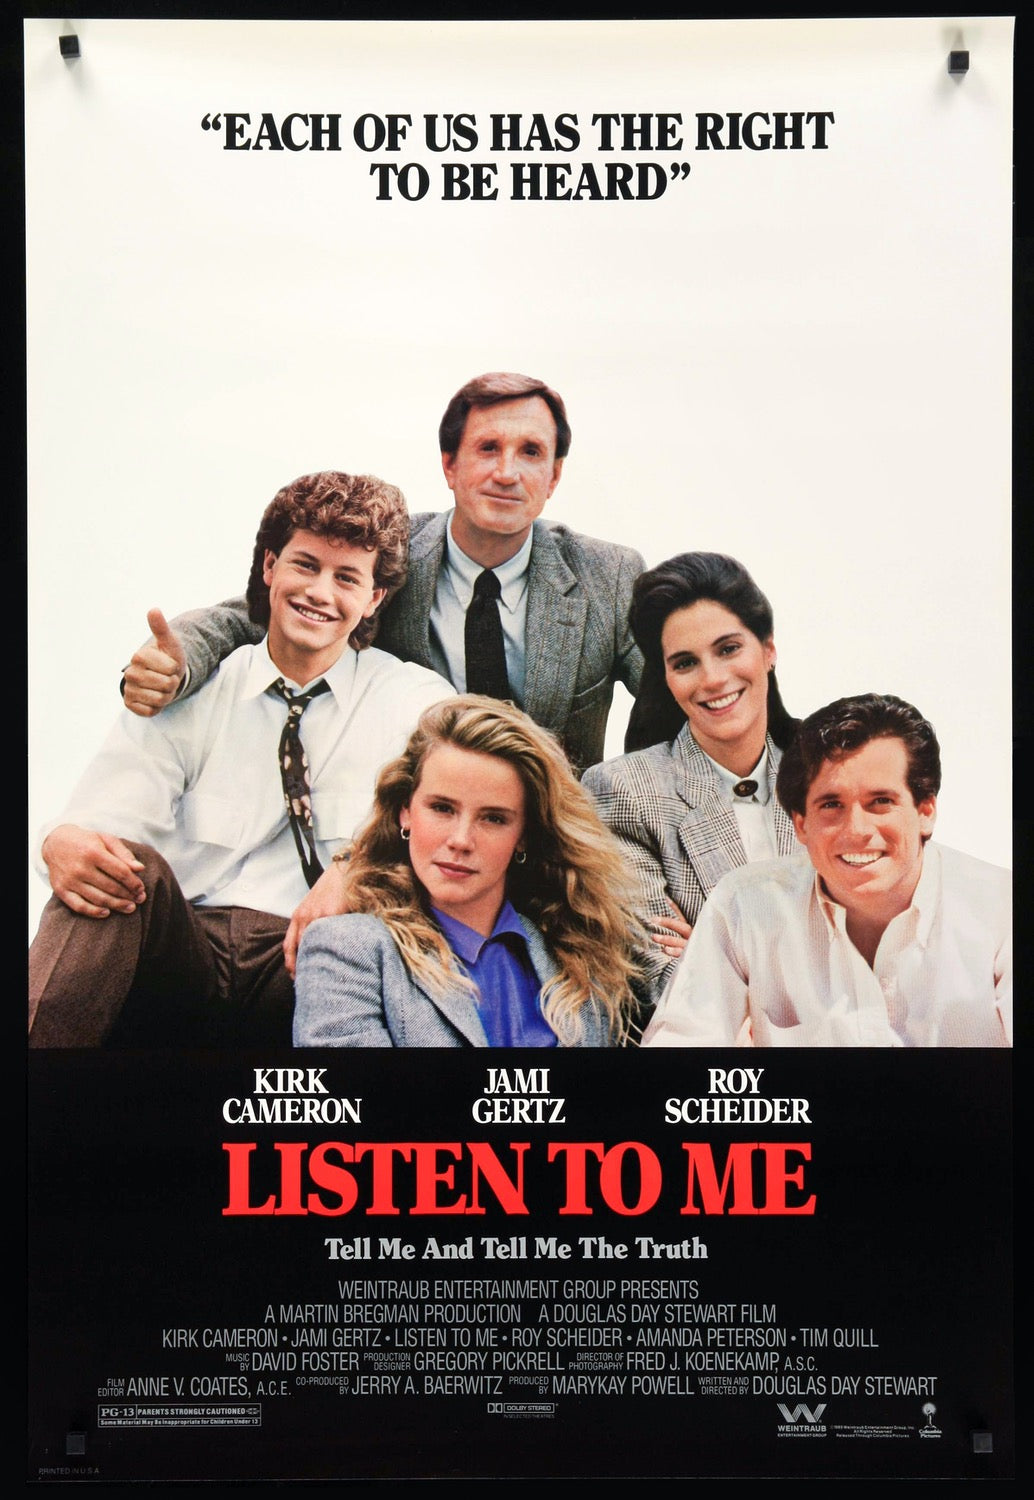 Listen to Me (1989) original movie poster for sale at Original Film Art